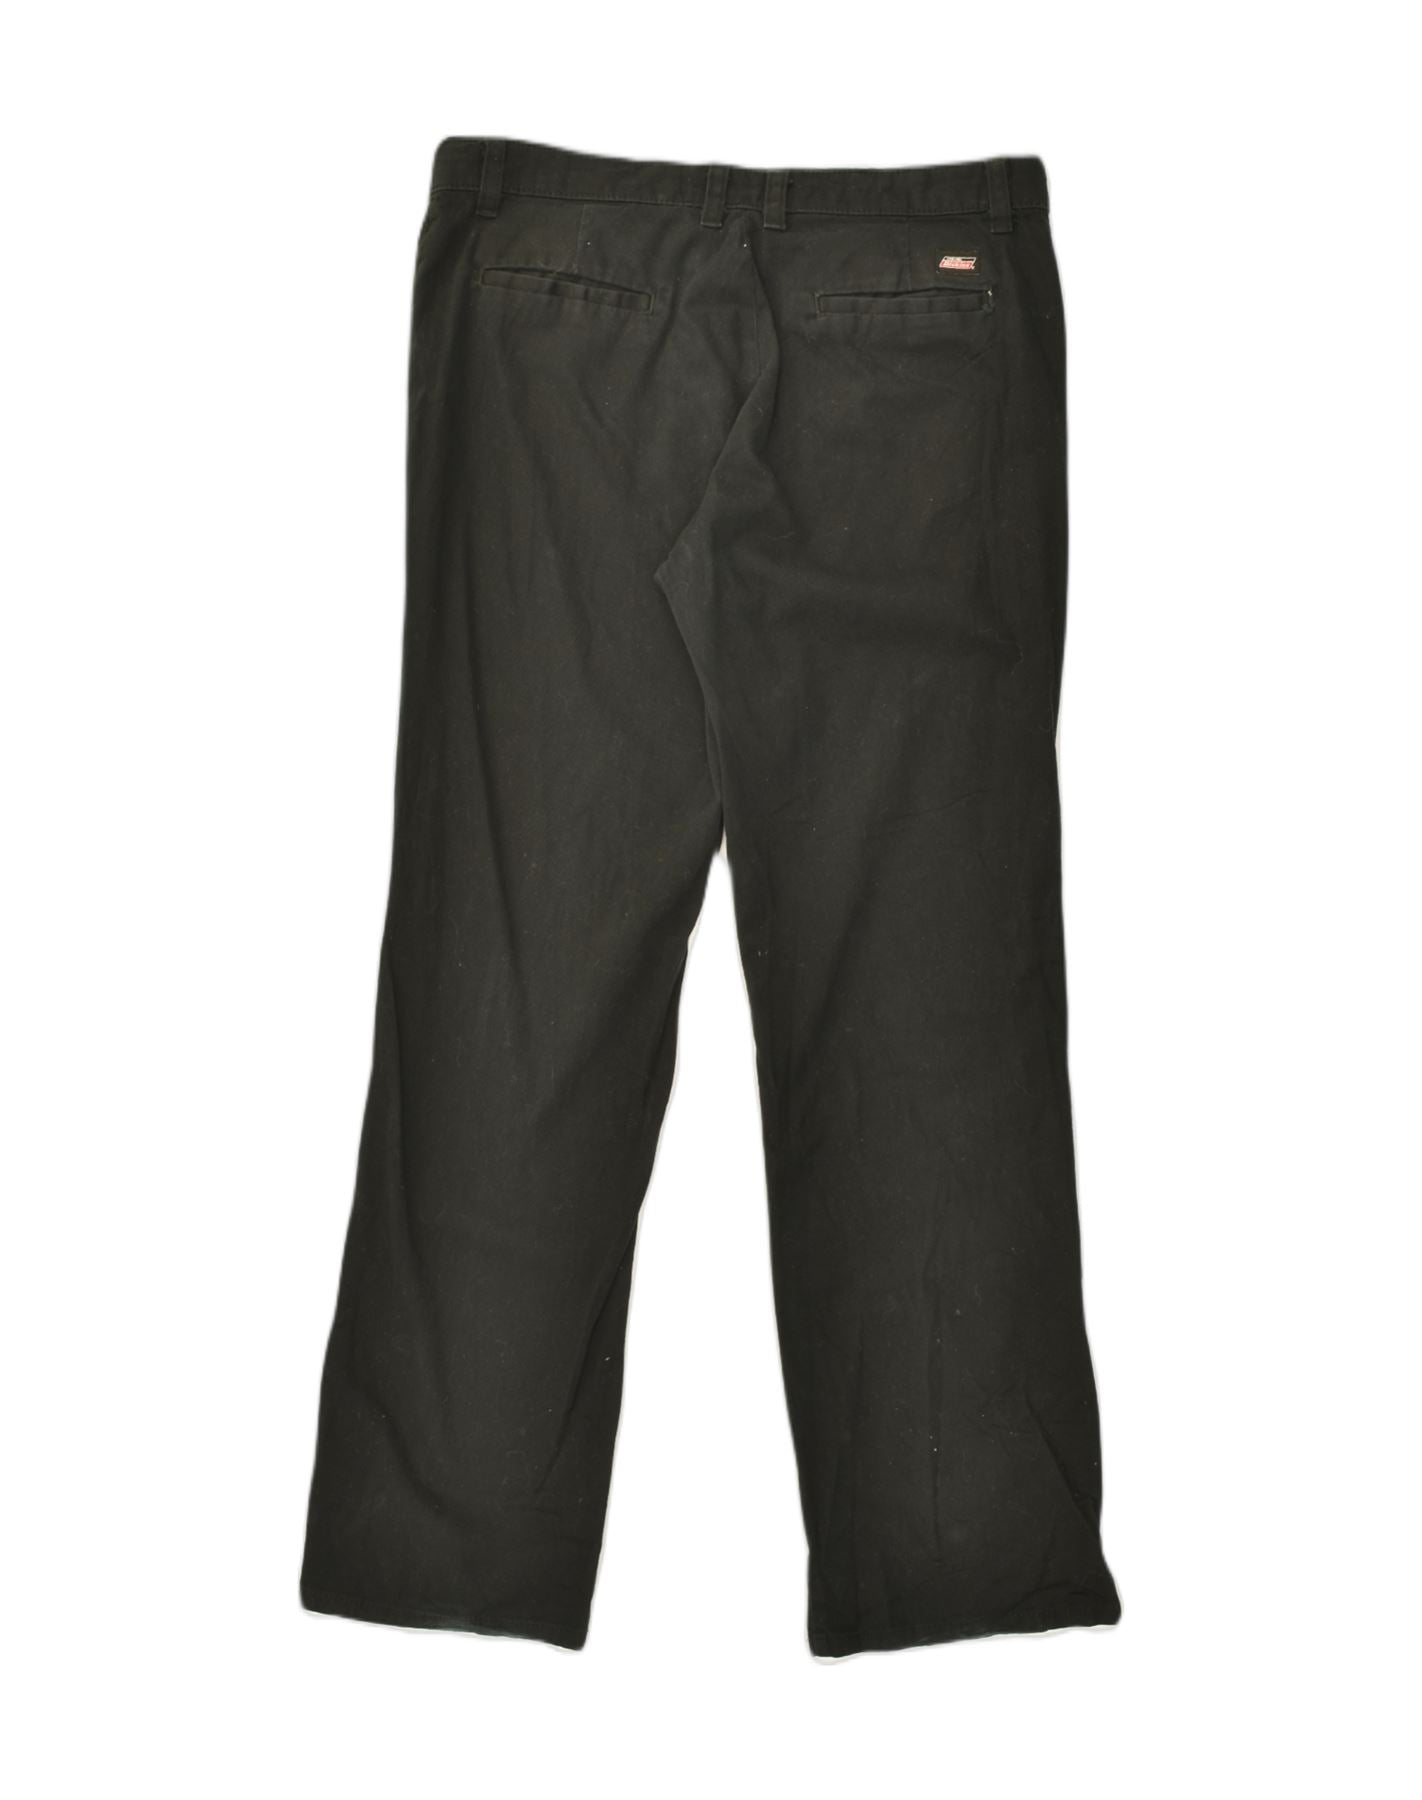 BANANA REPUBLIC Womens Girlfriend Chino Trousers US 6 Medium W32 L30 Khaki, Vintage & Second-Hand Clothing Online